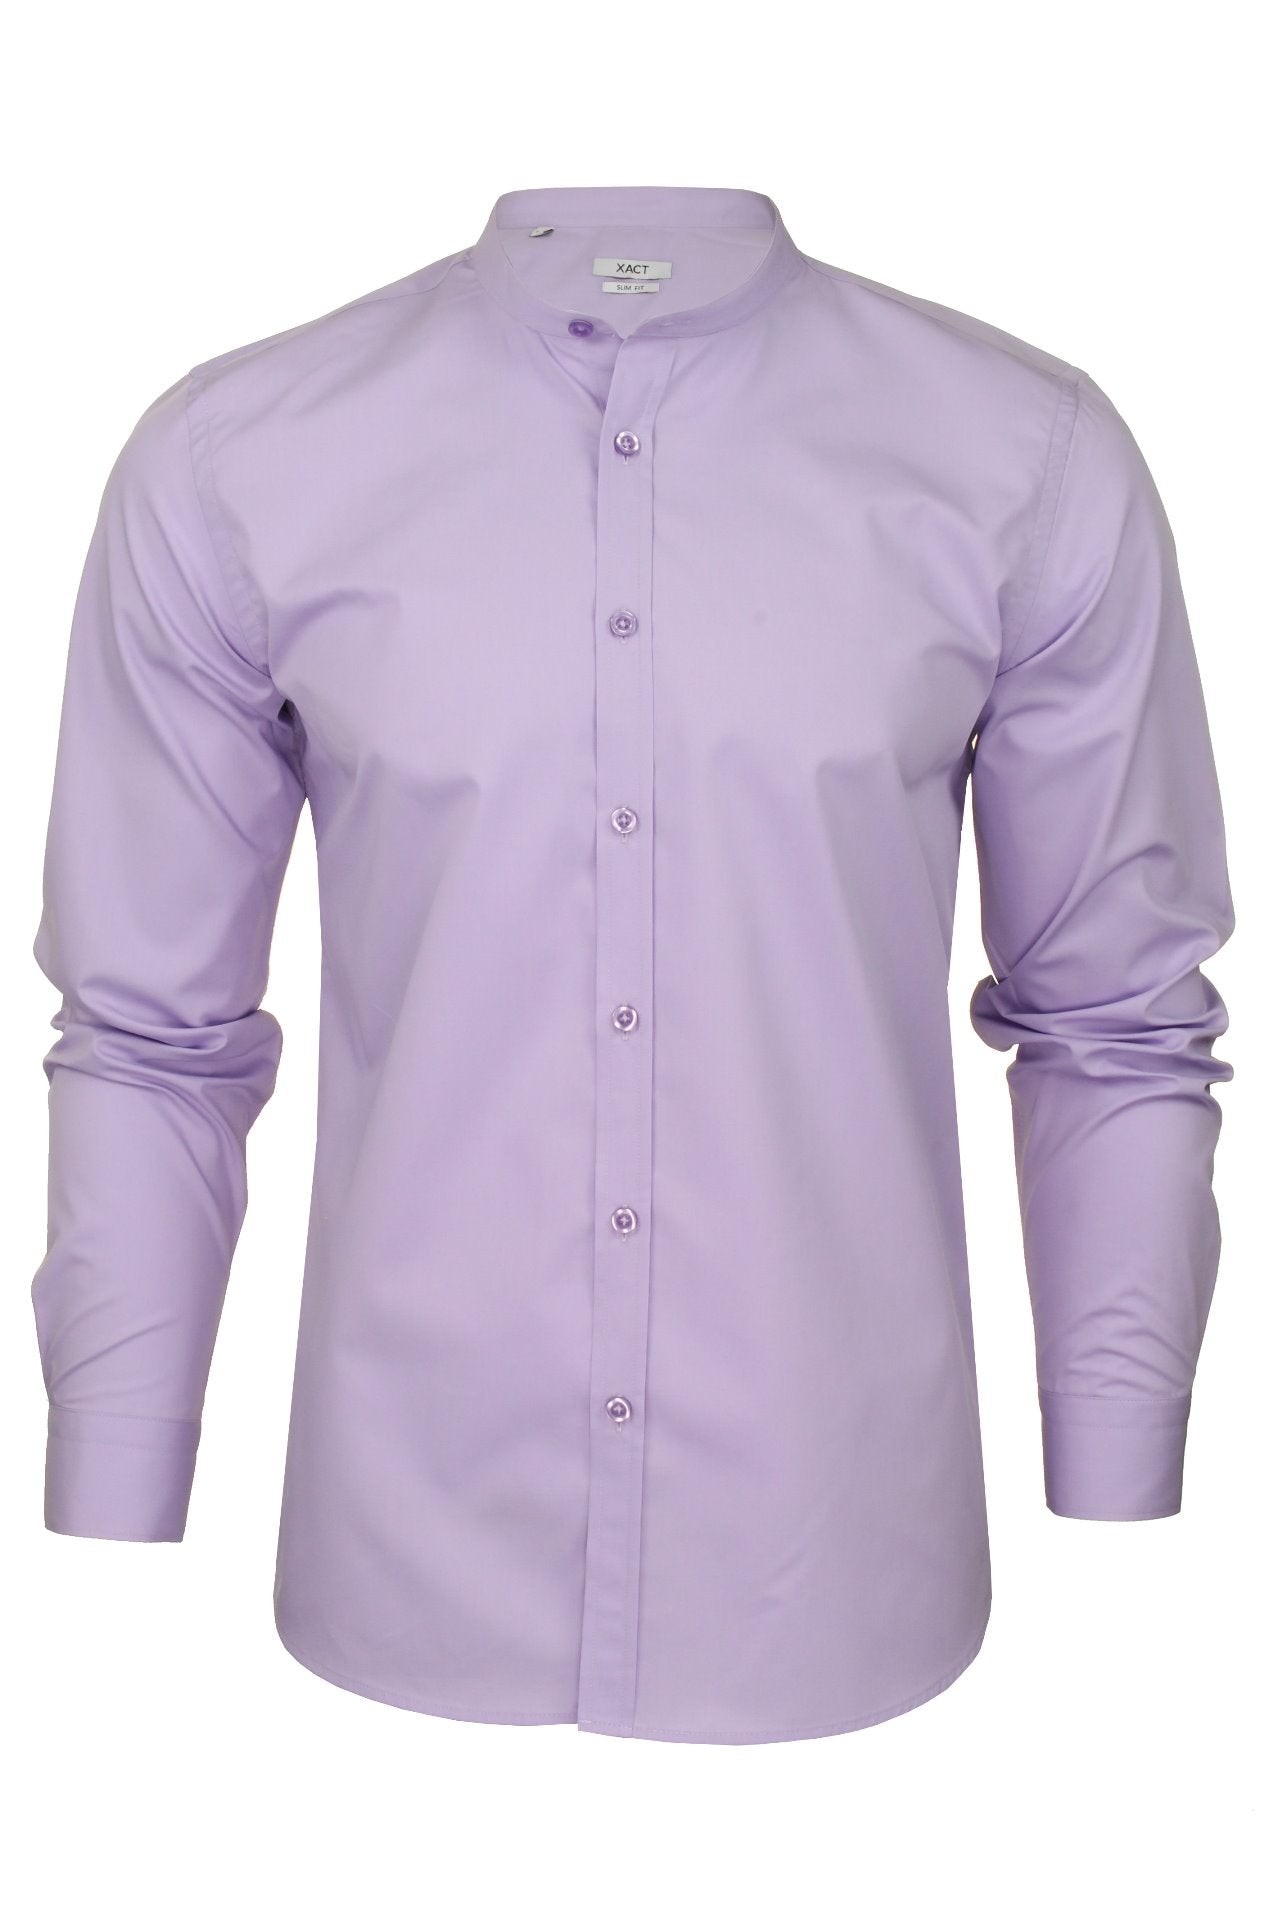 Xact Mens Grandad Collar Poplin Shirt - Long Sleeved Nehru  - Slim Fit-Main Image